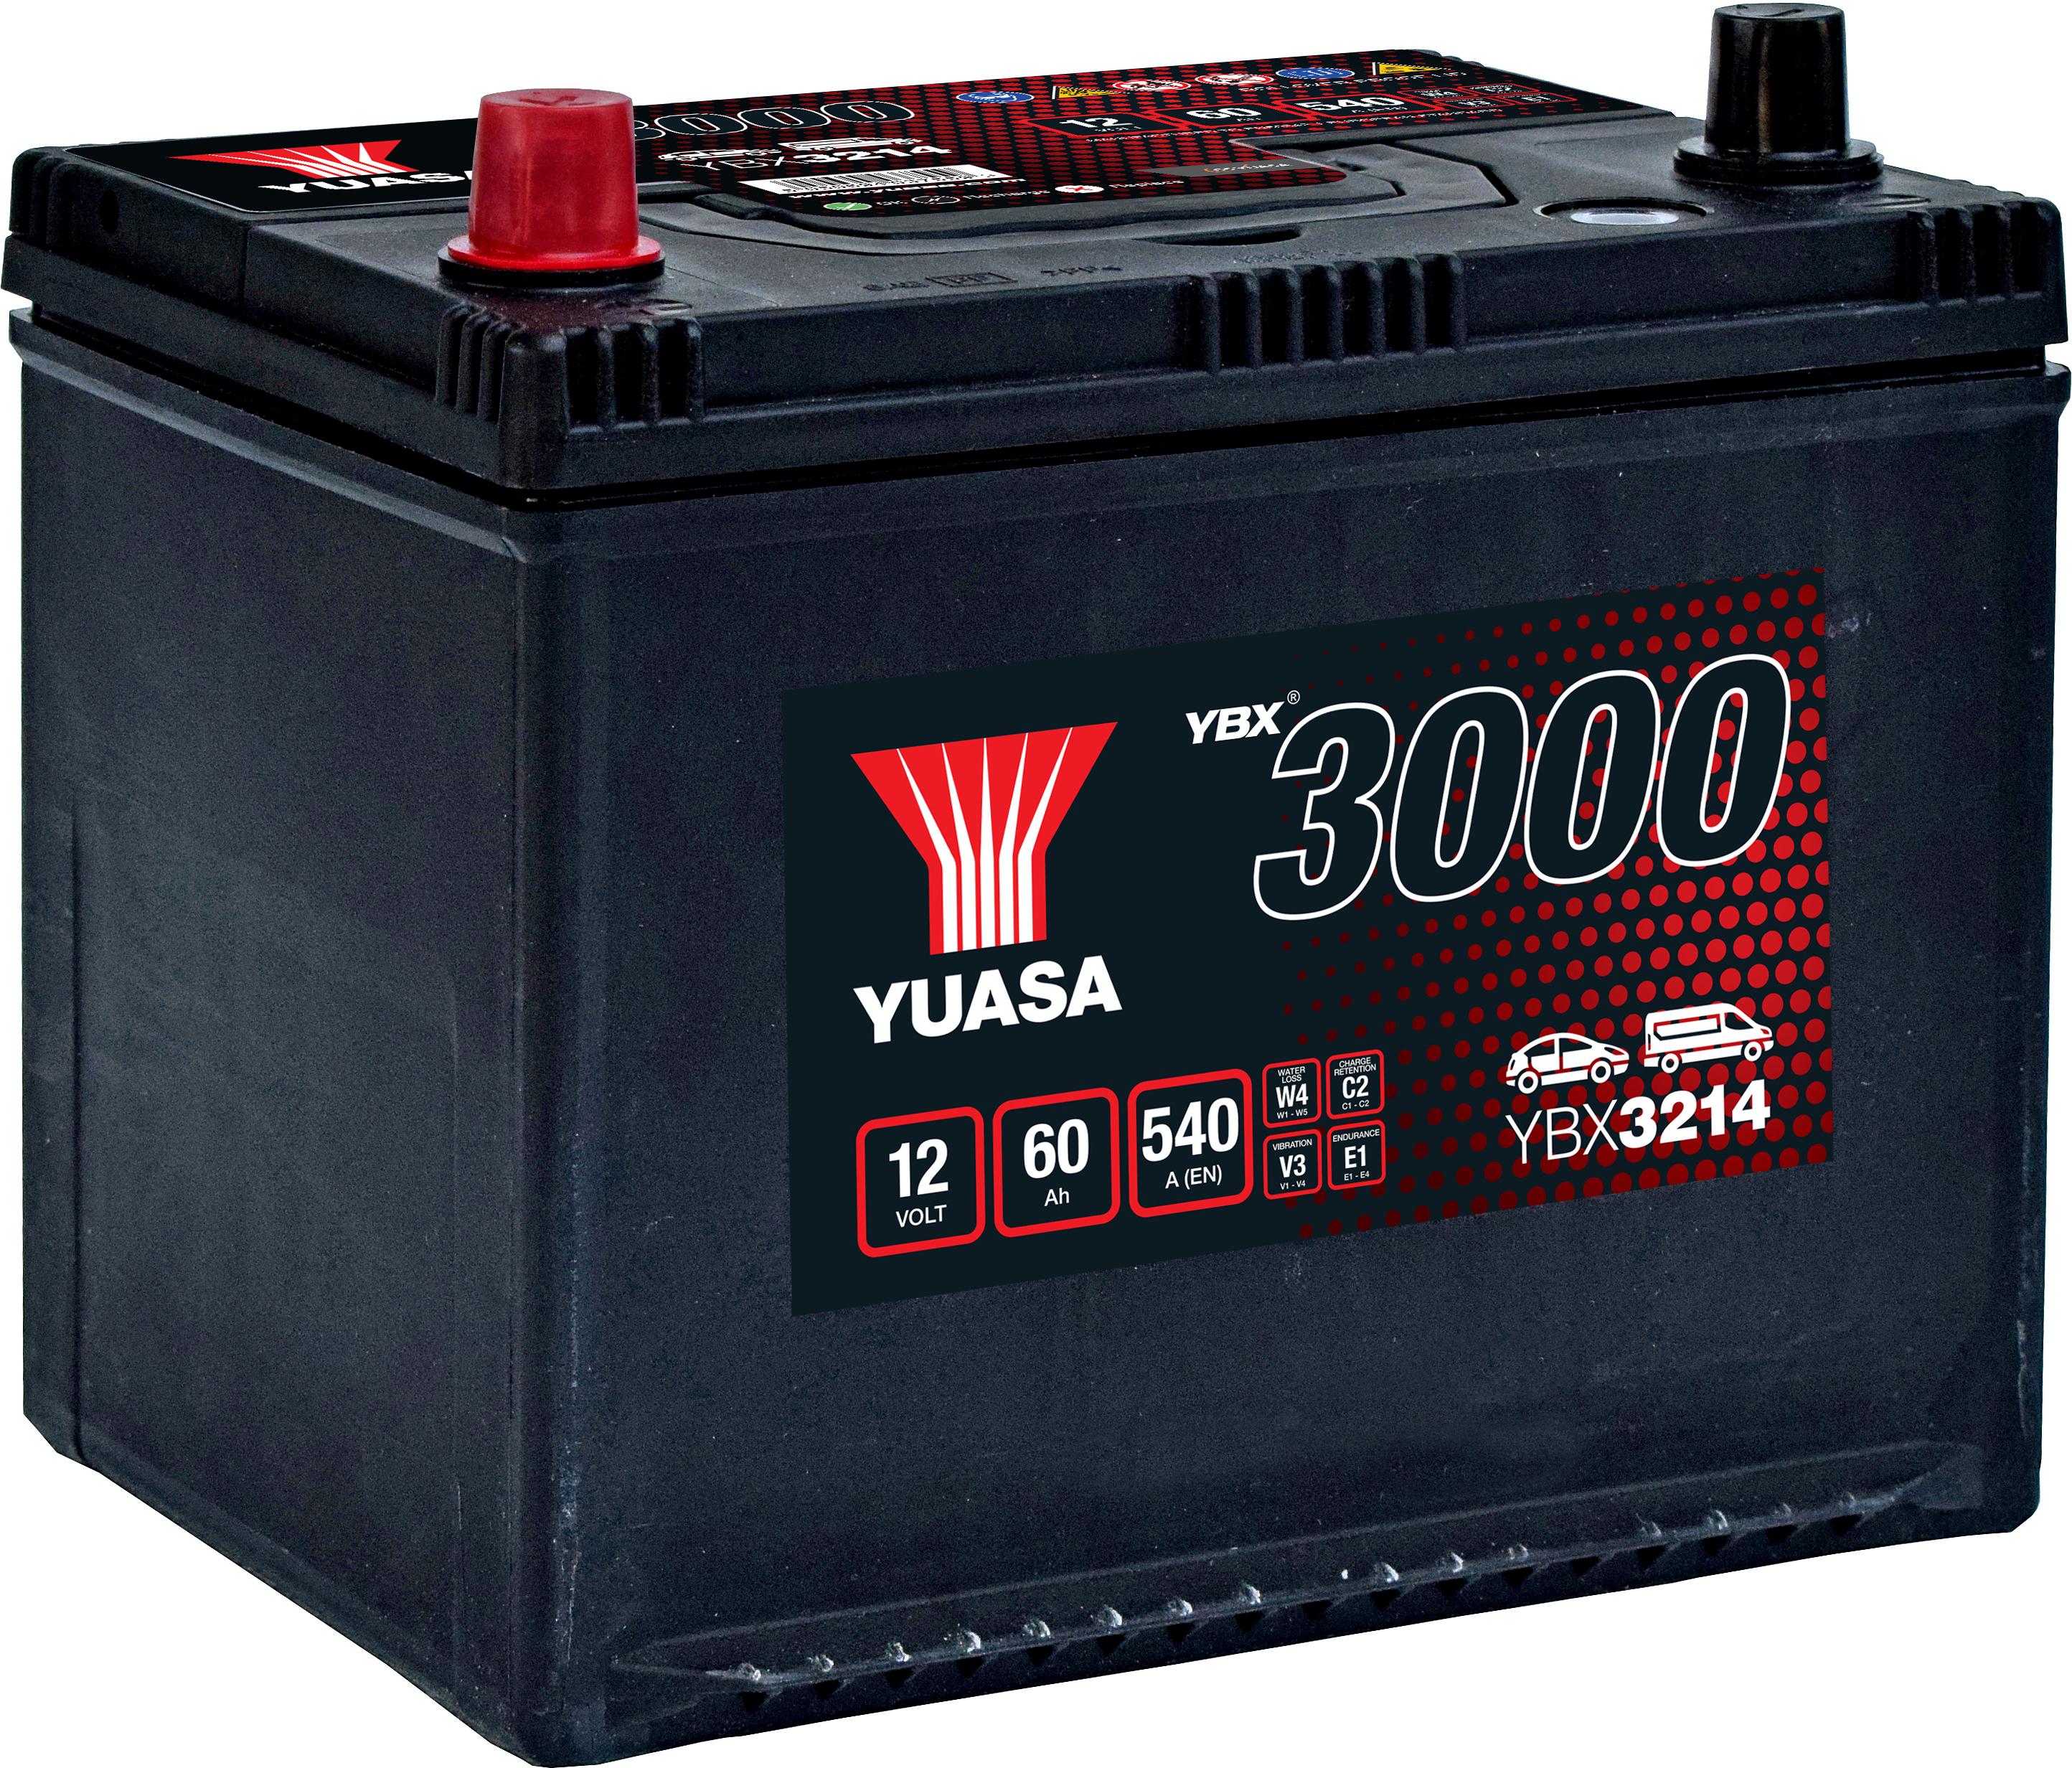 Ybx3214 12V 60Ah 540A Yuasa Smf Battery